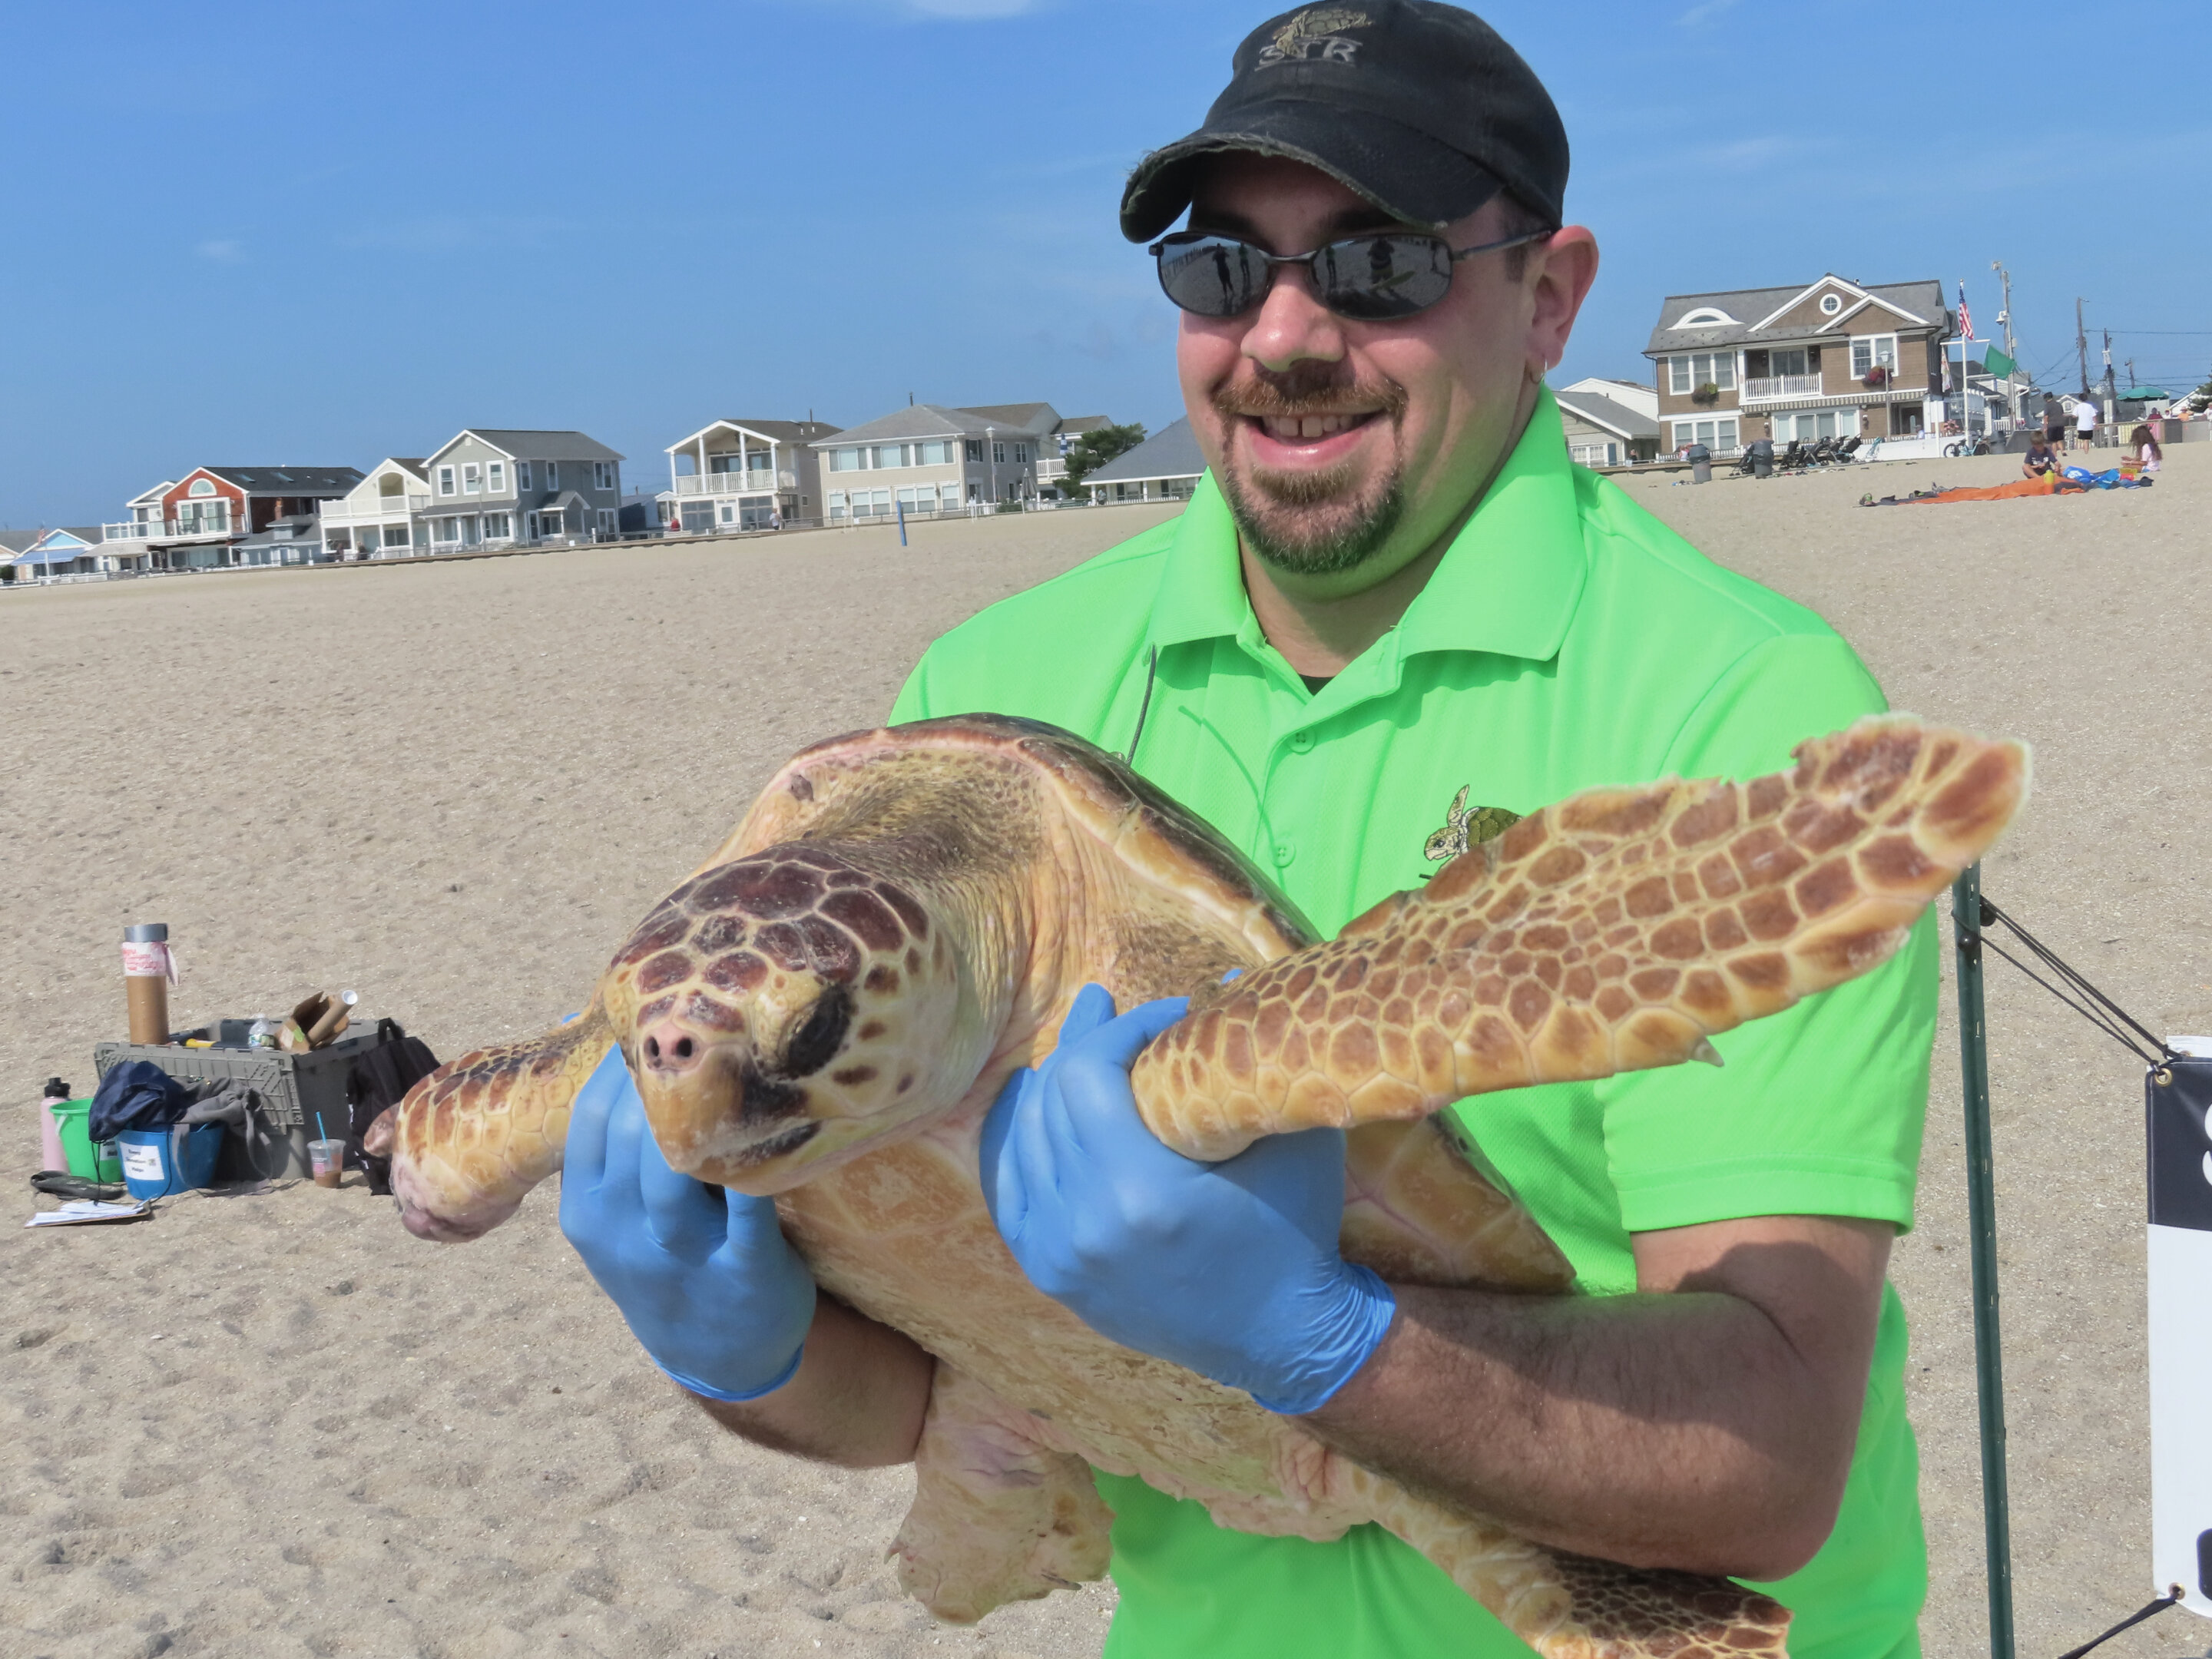 World’s toughest turtle? Survivor among 8 returned to ocean